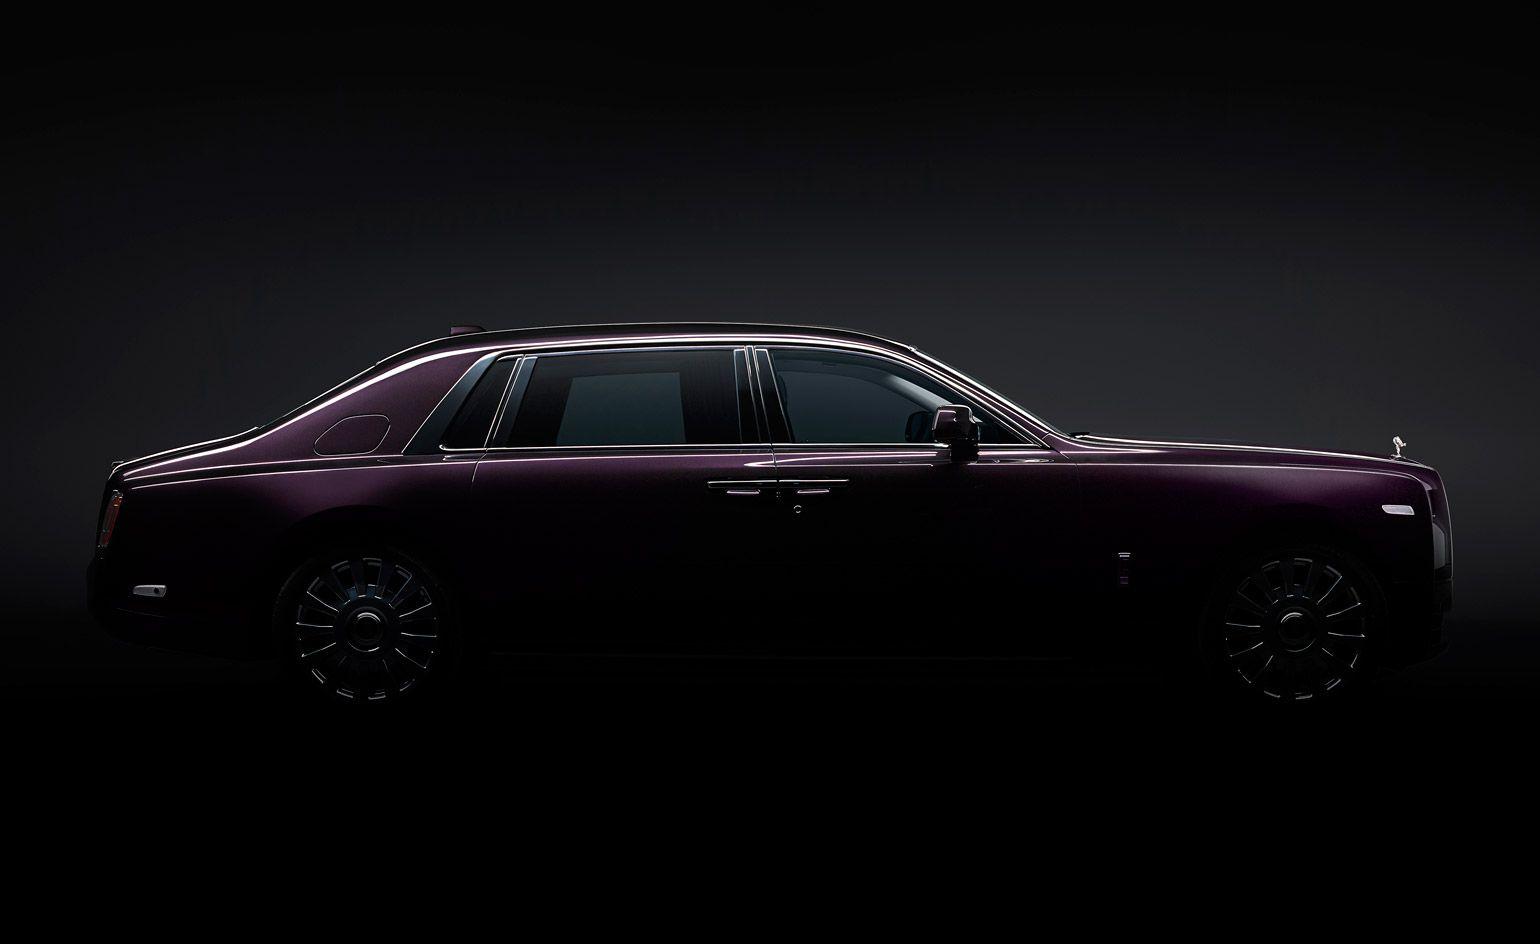 Rolls Royce Phantom 2018: In Picture. Wallpaper*